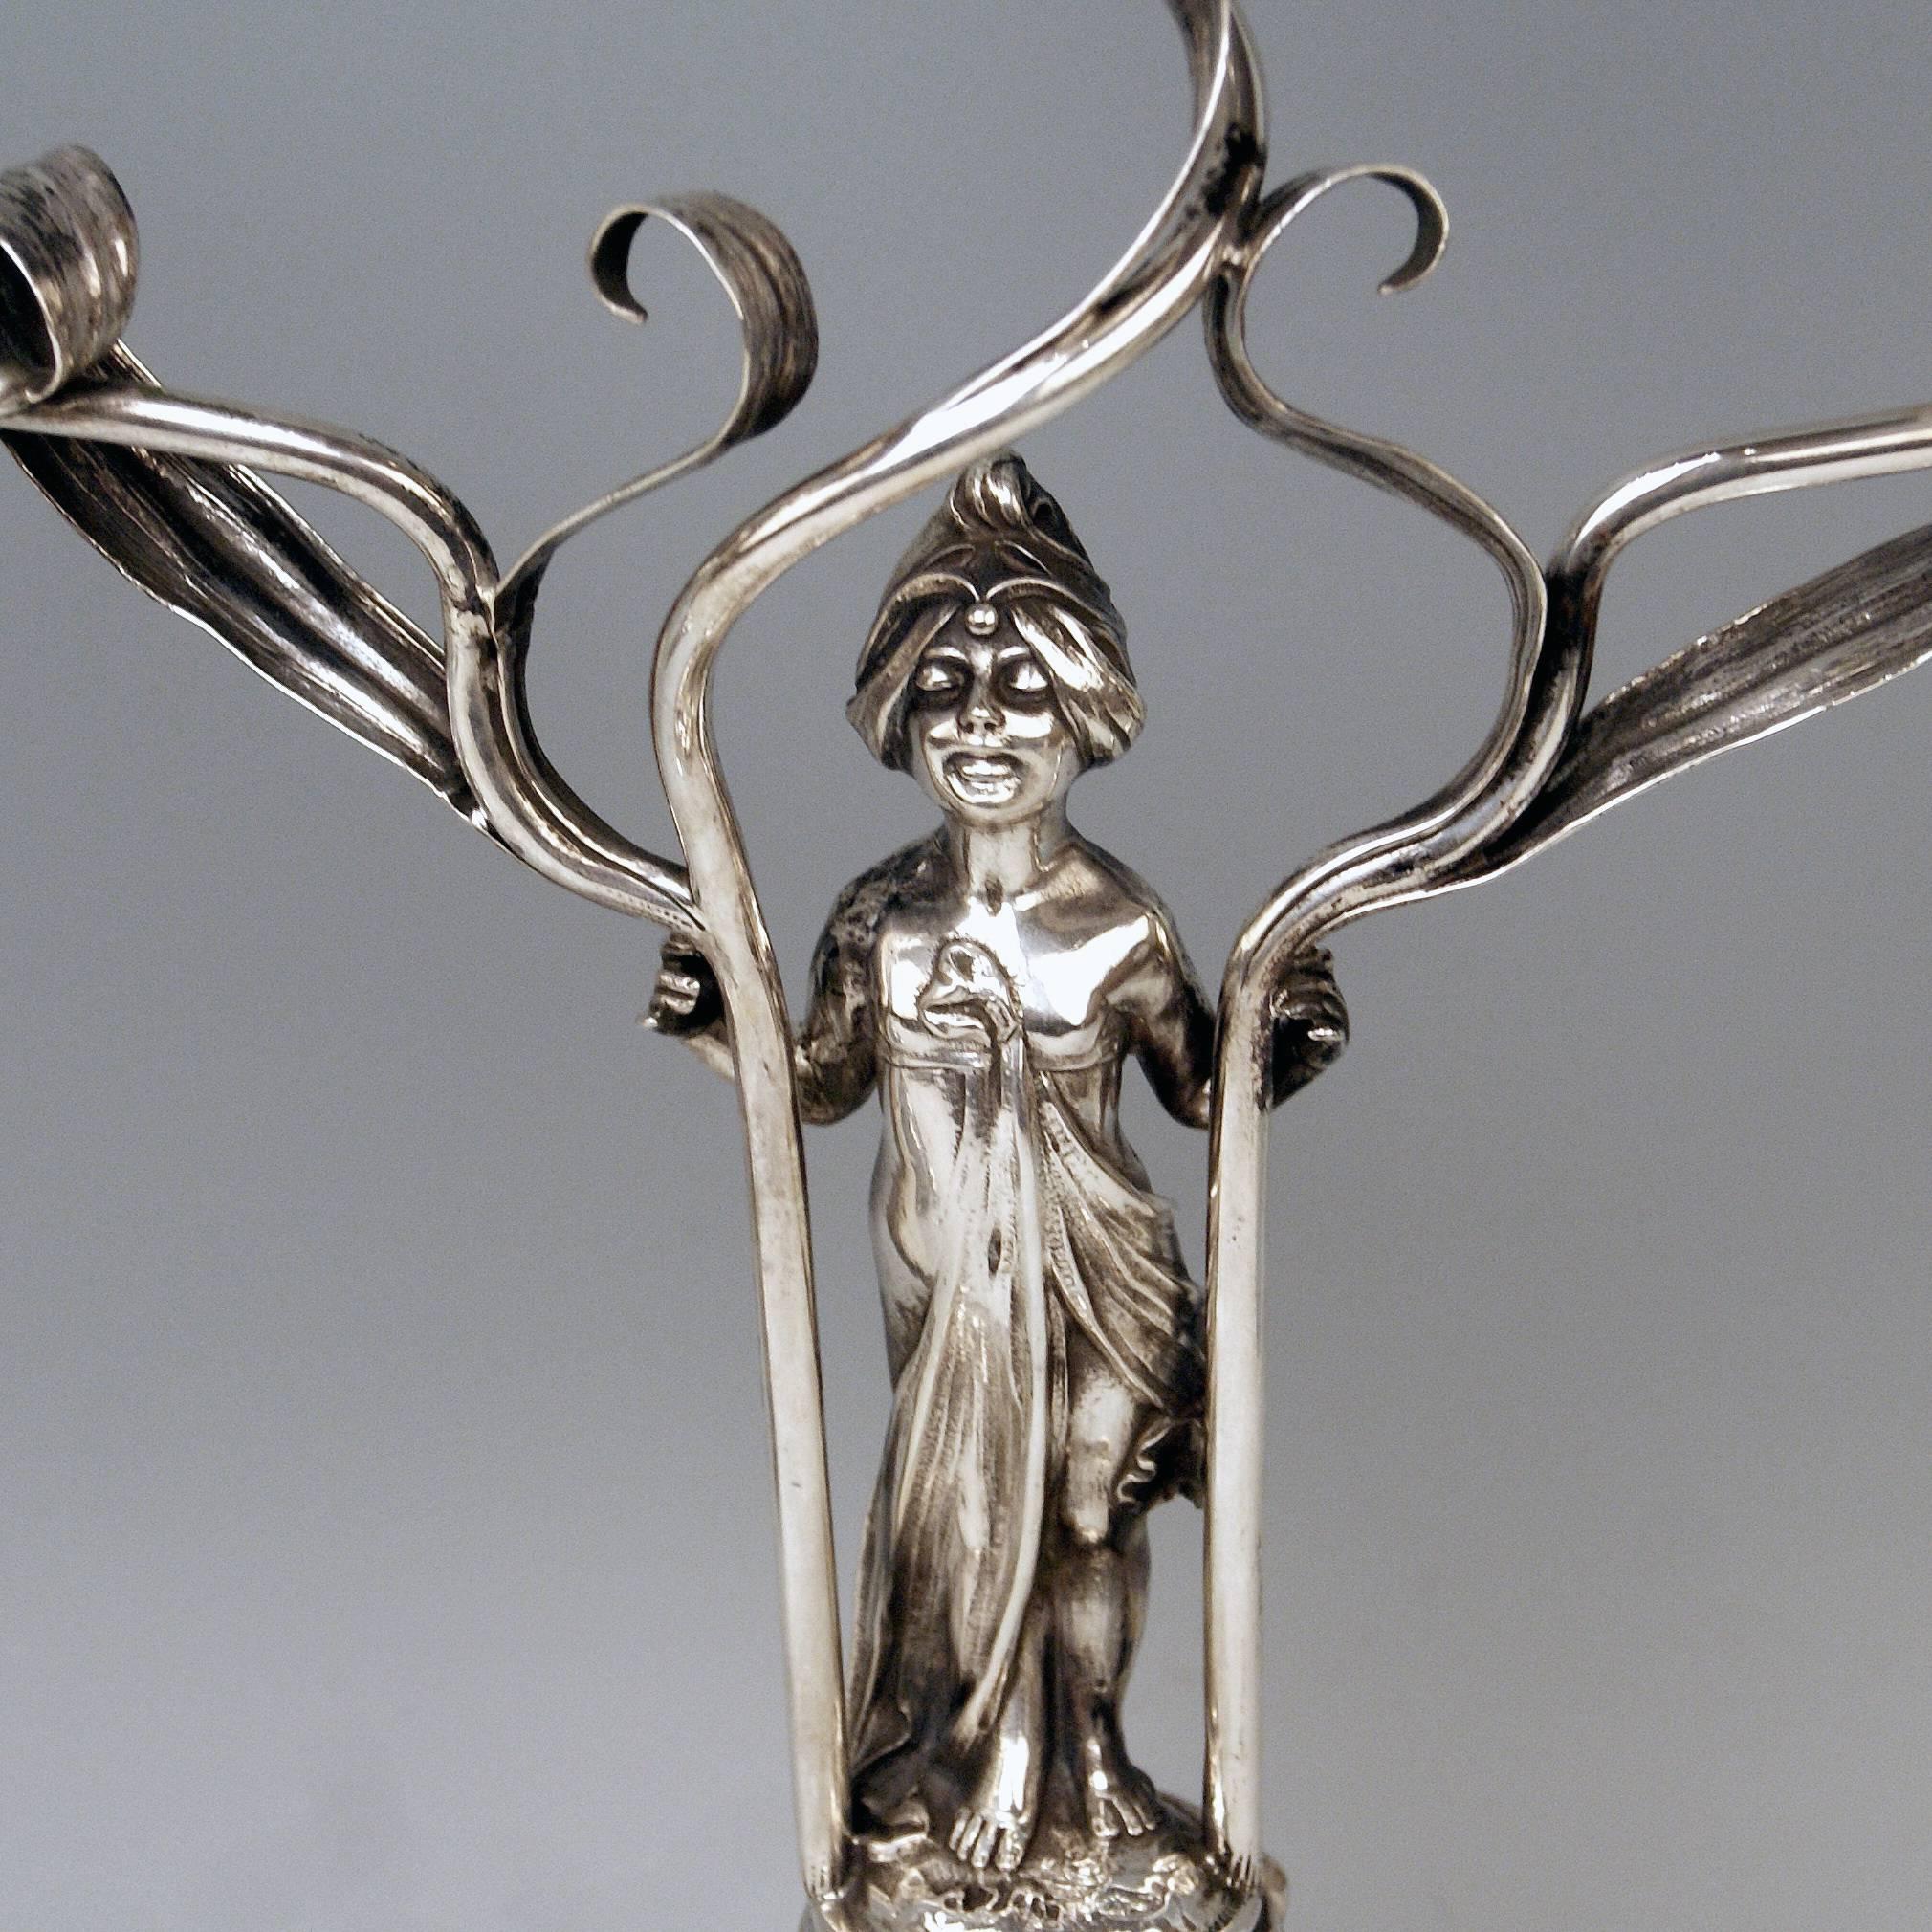 Early 20th Century Silver Art Nouveau Pair of Candlesticks Schoellkopf Pforzheim Germany, 1900